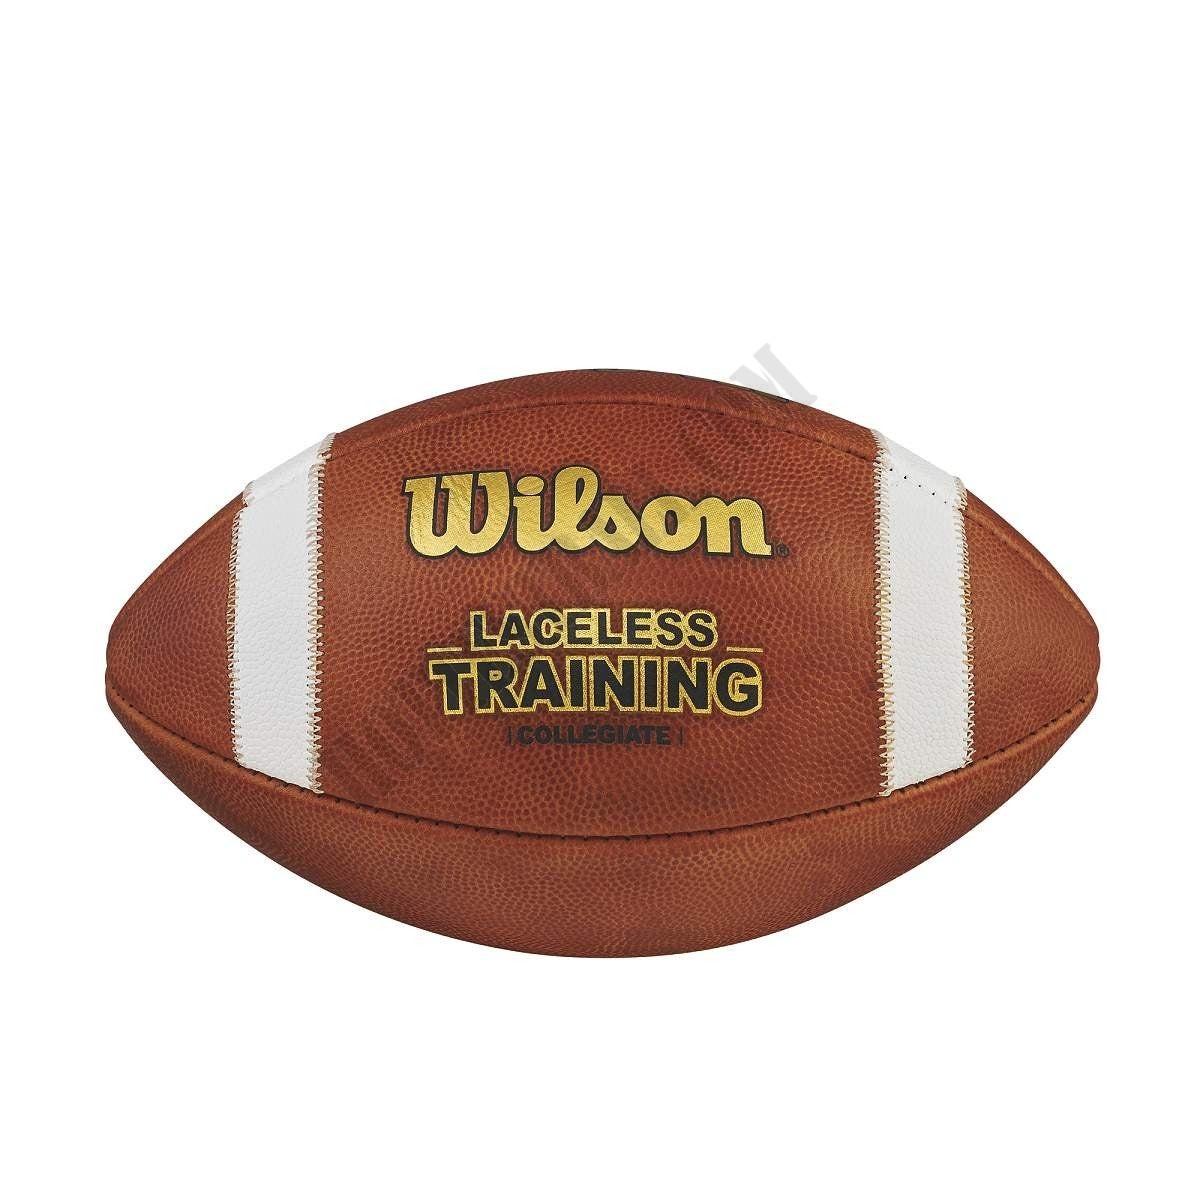 Laceless Training Football - Wilson Discount Store - Laceless Training Football - Wilson Discount Store